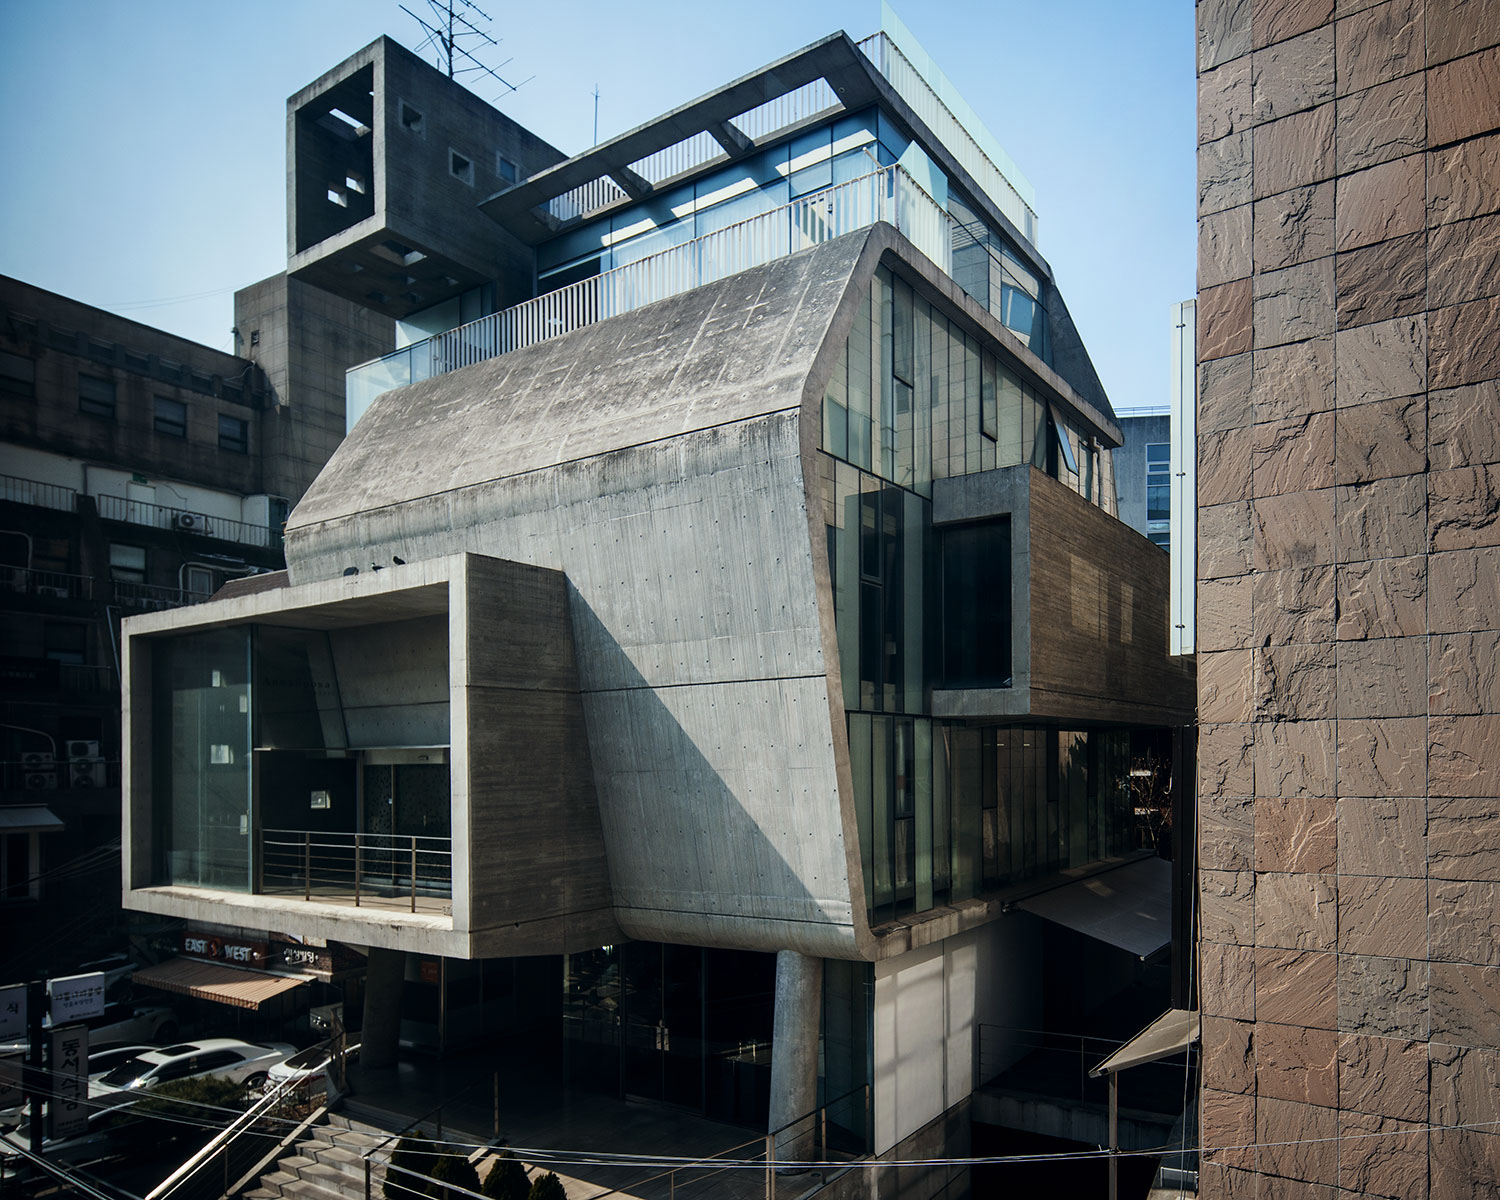 Architecture: Seoul Brutalist Revival